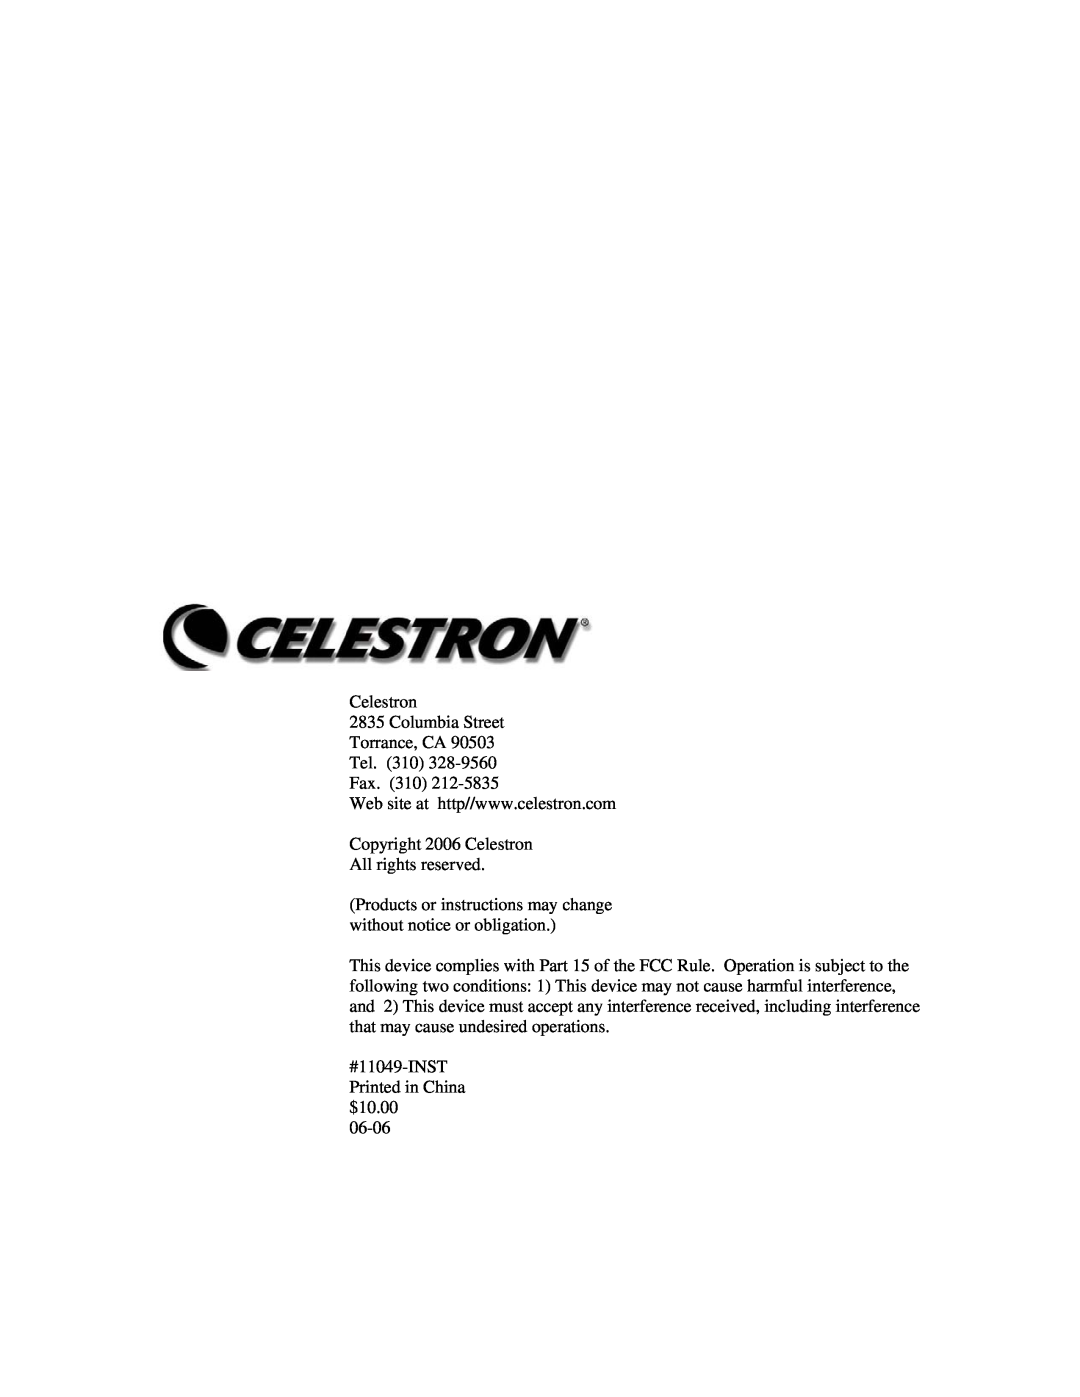 Celestron 4SE Celestron 2835 Columbia Street Torrance, CA Tel. 310 Fax. 310, Copyright 2006 Celestron All rights reserved 